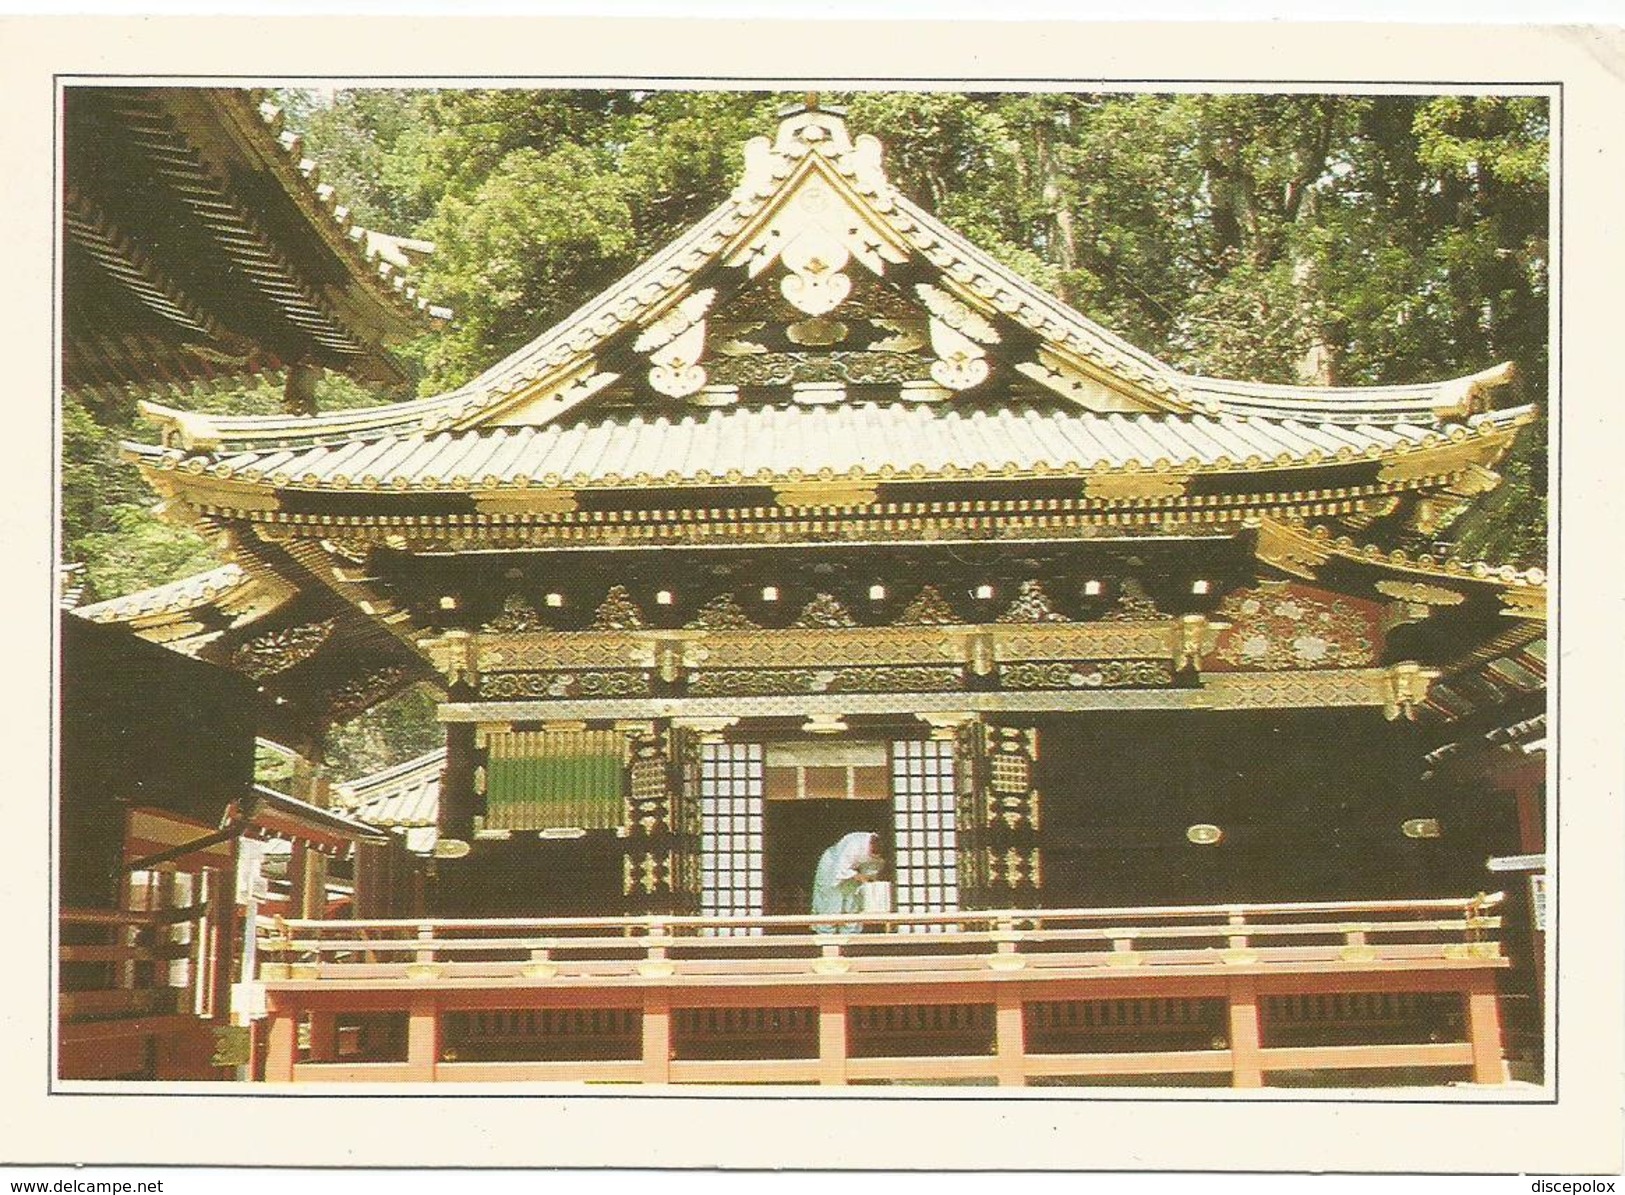 V500 Giappone Japan - Tosho Gu - Nikko - Santuario Principale - Cartolina Con Legenda Descrittiva - Asia